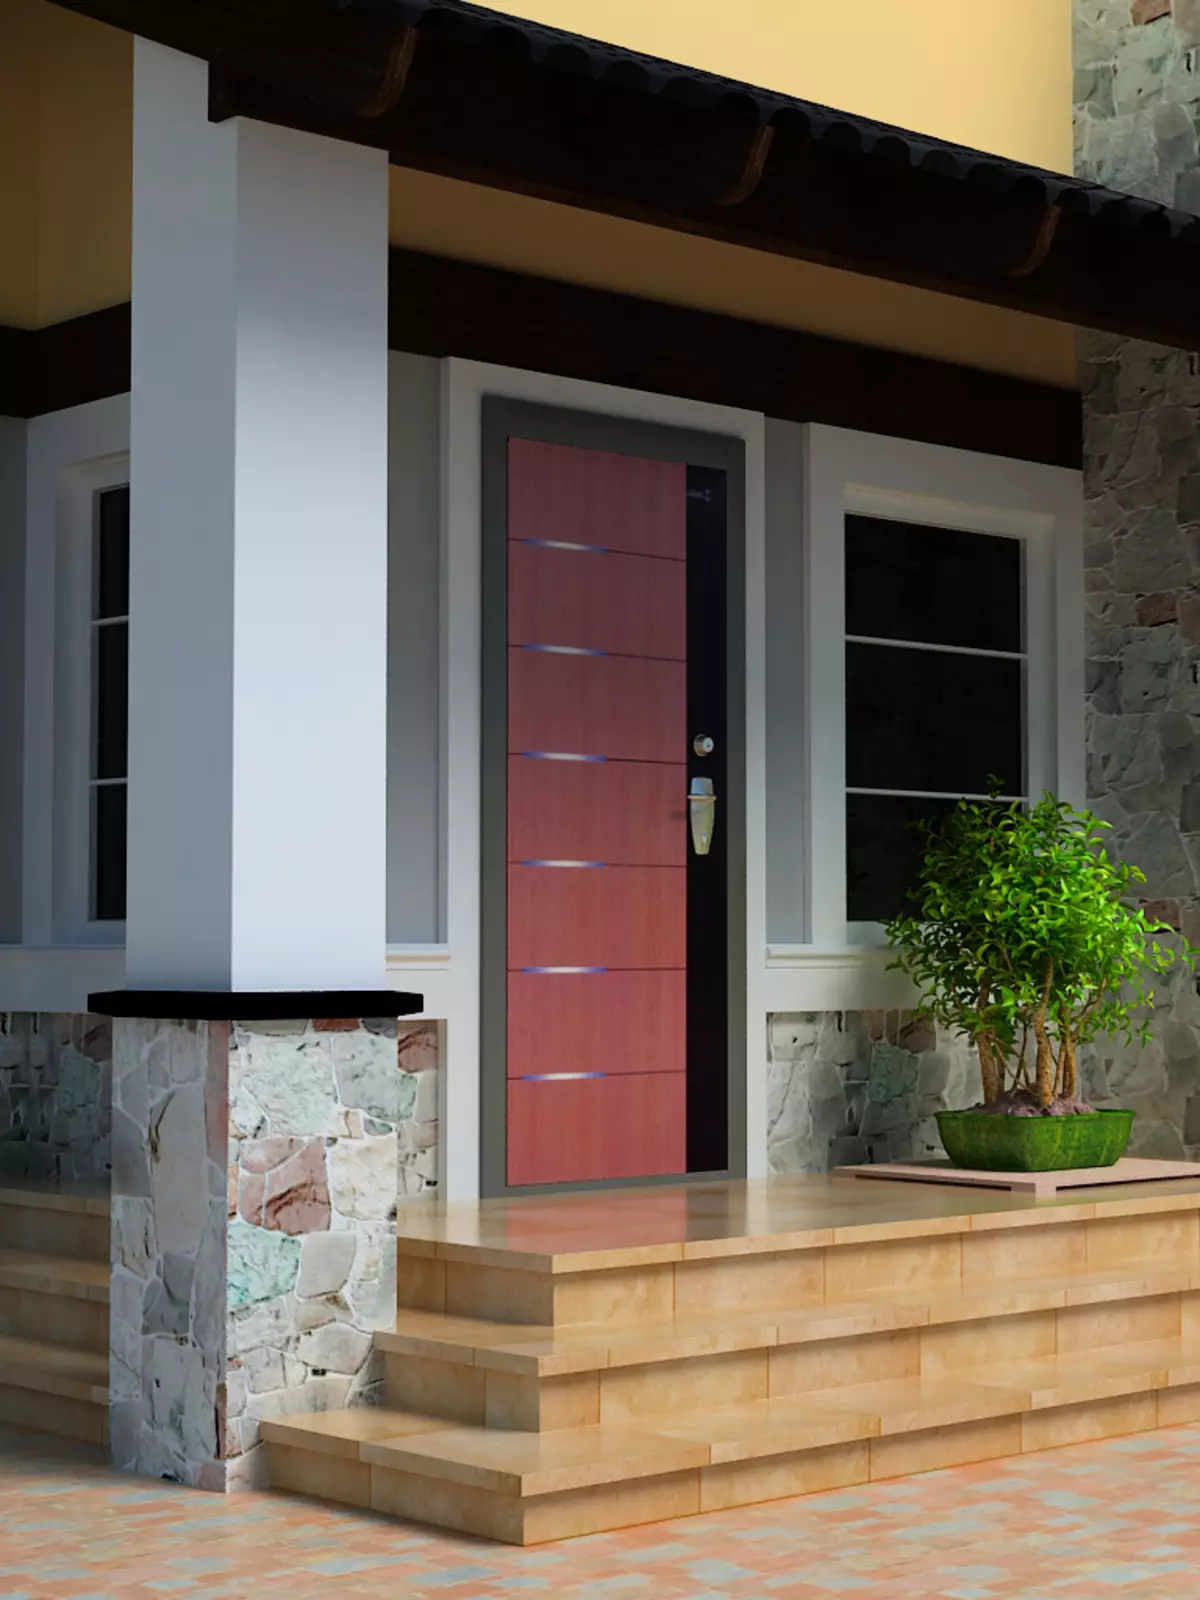 Entrance door for a country house: 5 selection criteria